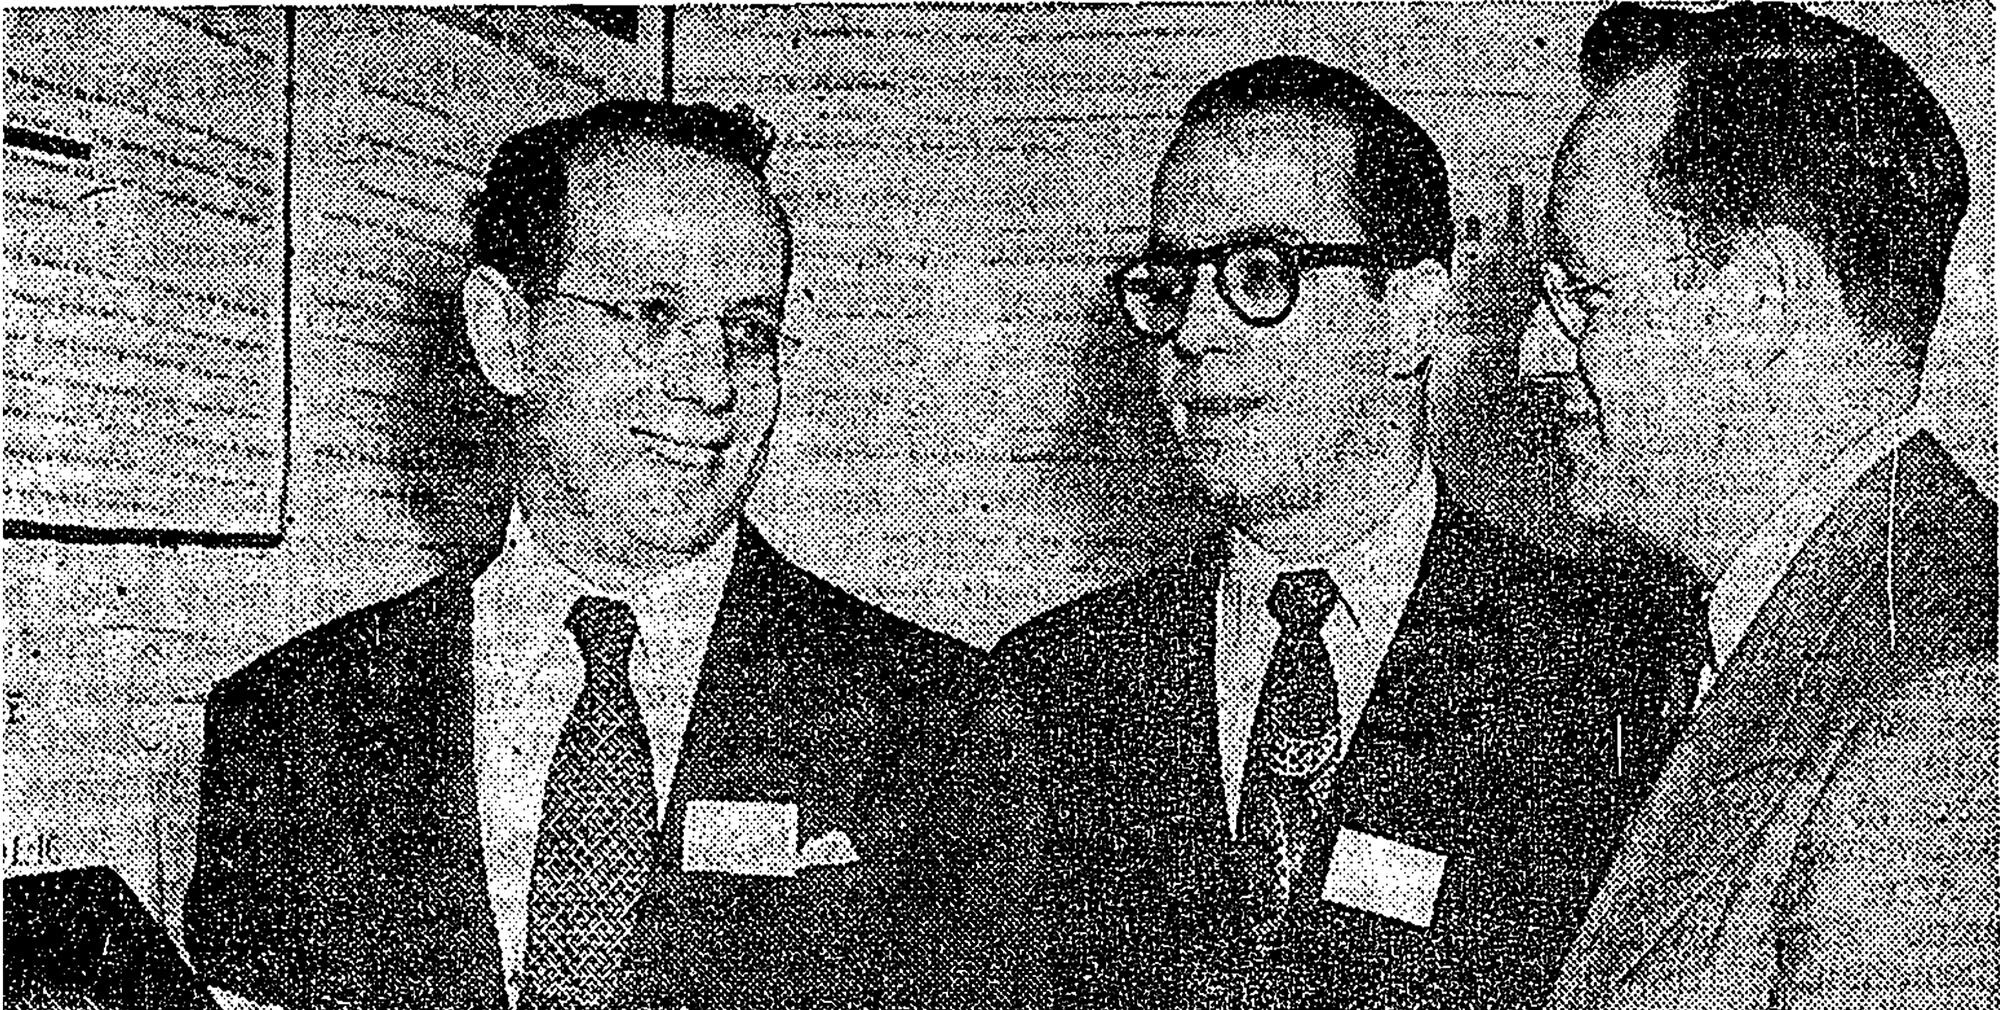 Els tres germans Sackler (fotografia: New York Herald Tribune, 13 de maig de 1950).